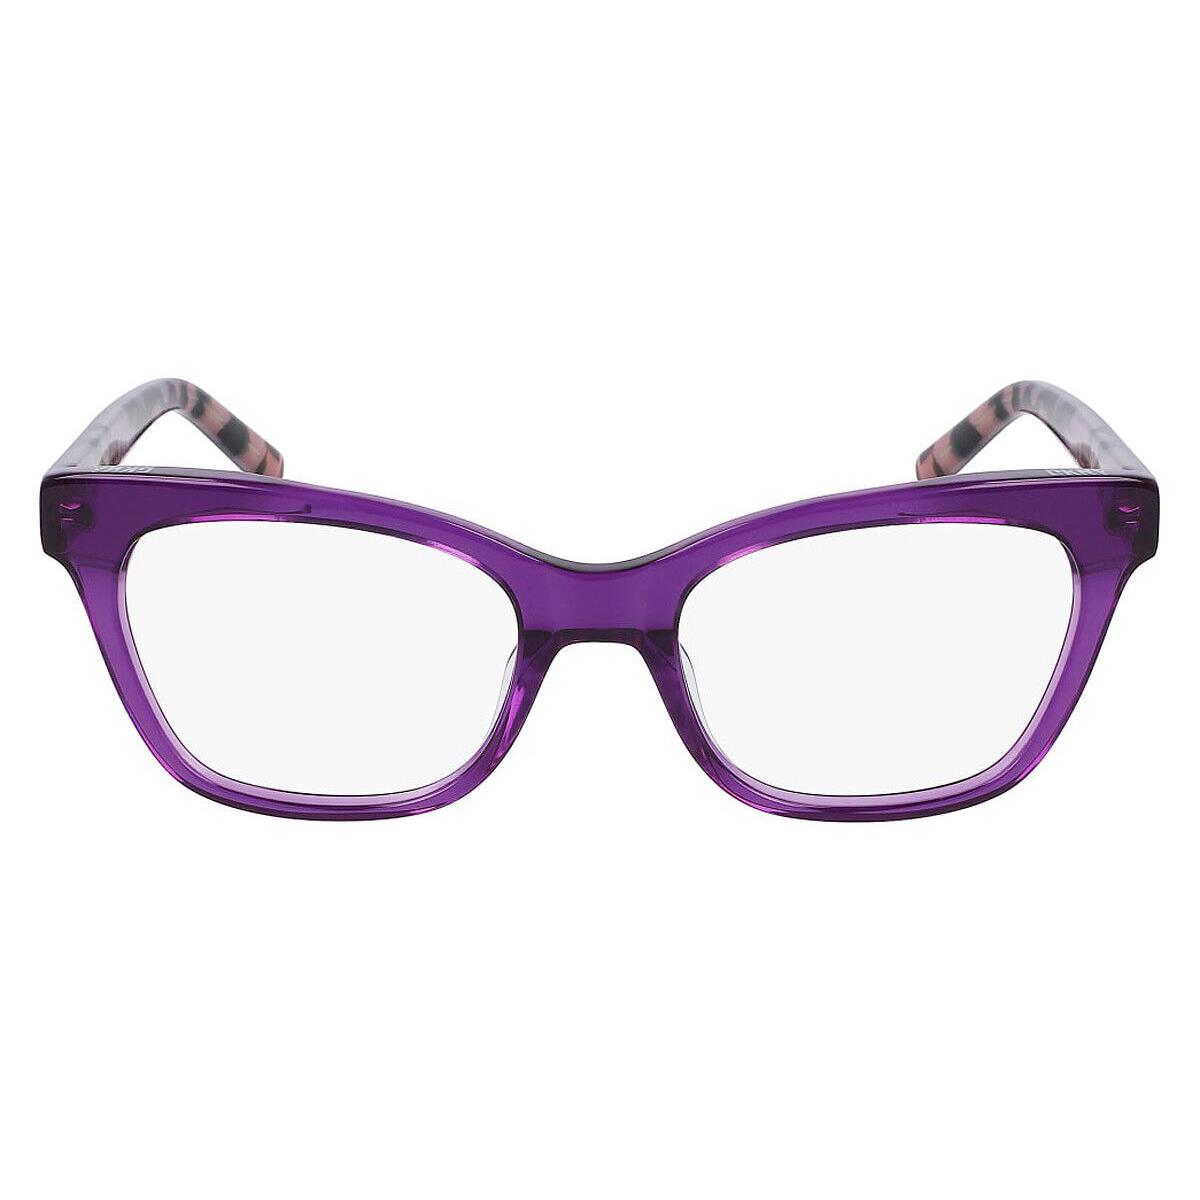 Dkny DK5053 Eyeglasses Women Crystal Purple Cat Eye 51mm